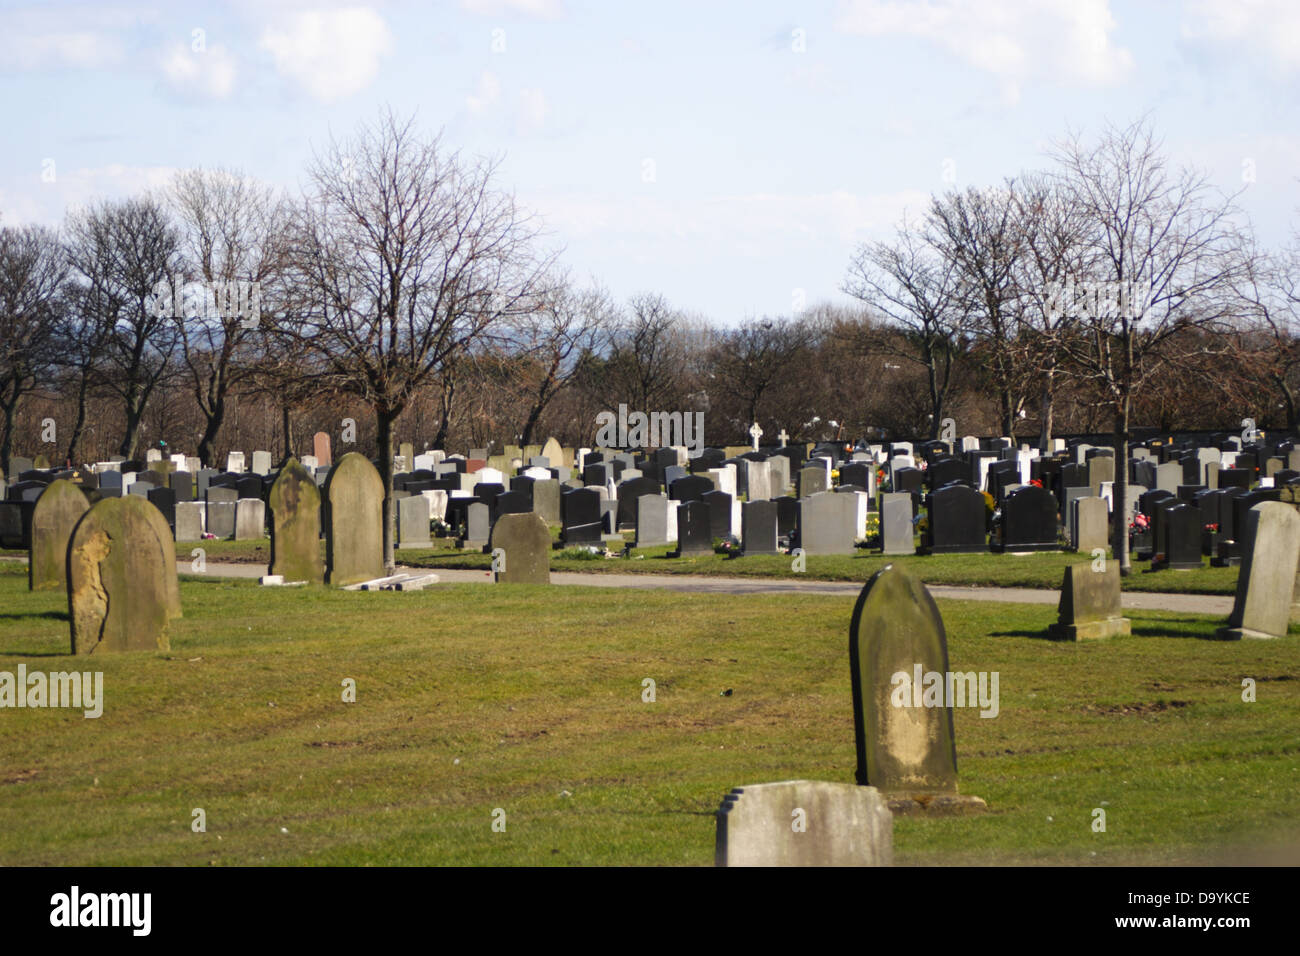 View of gravestones in a Cemetry at Grangetown, Sunderland. Stock Photo